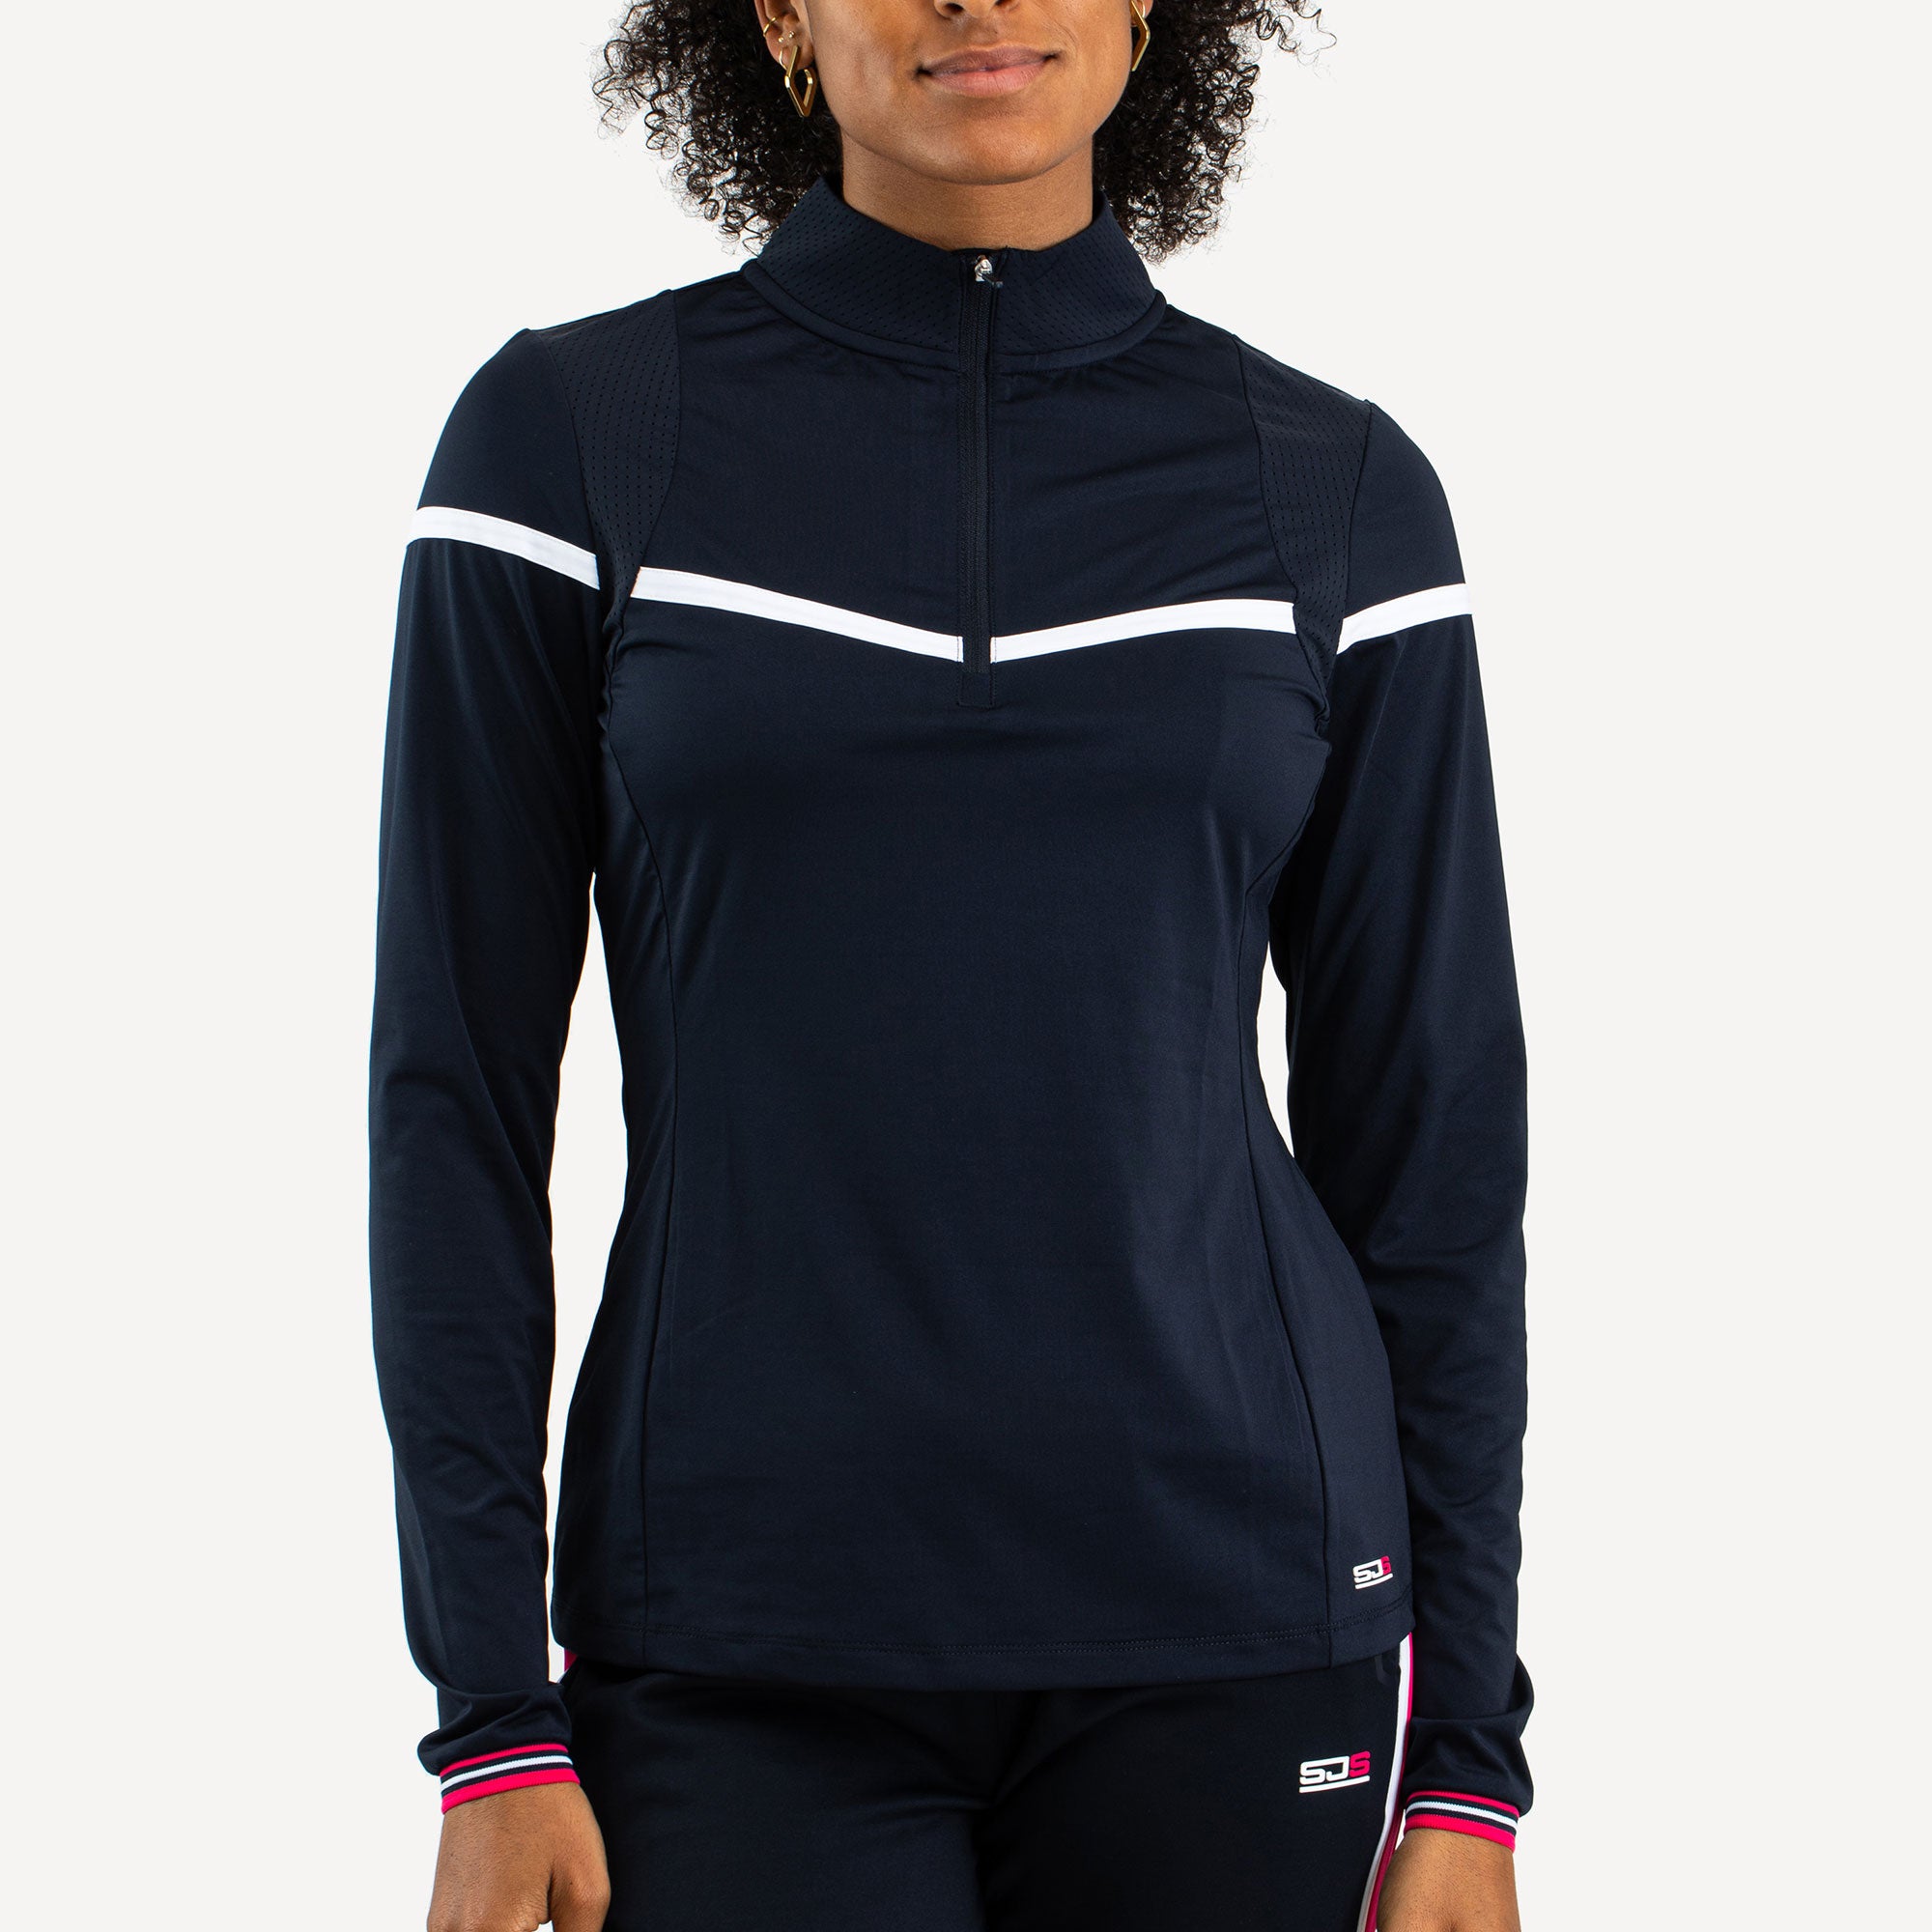 Sjeng Sports Celyn Women's Long-Sleeve Tennis Shirt Blue (1)